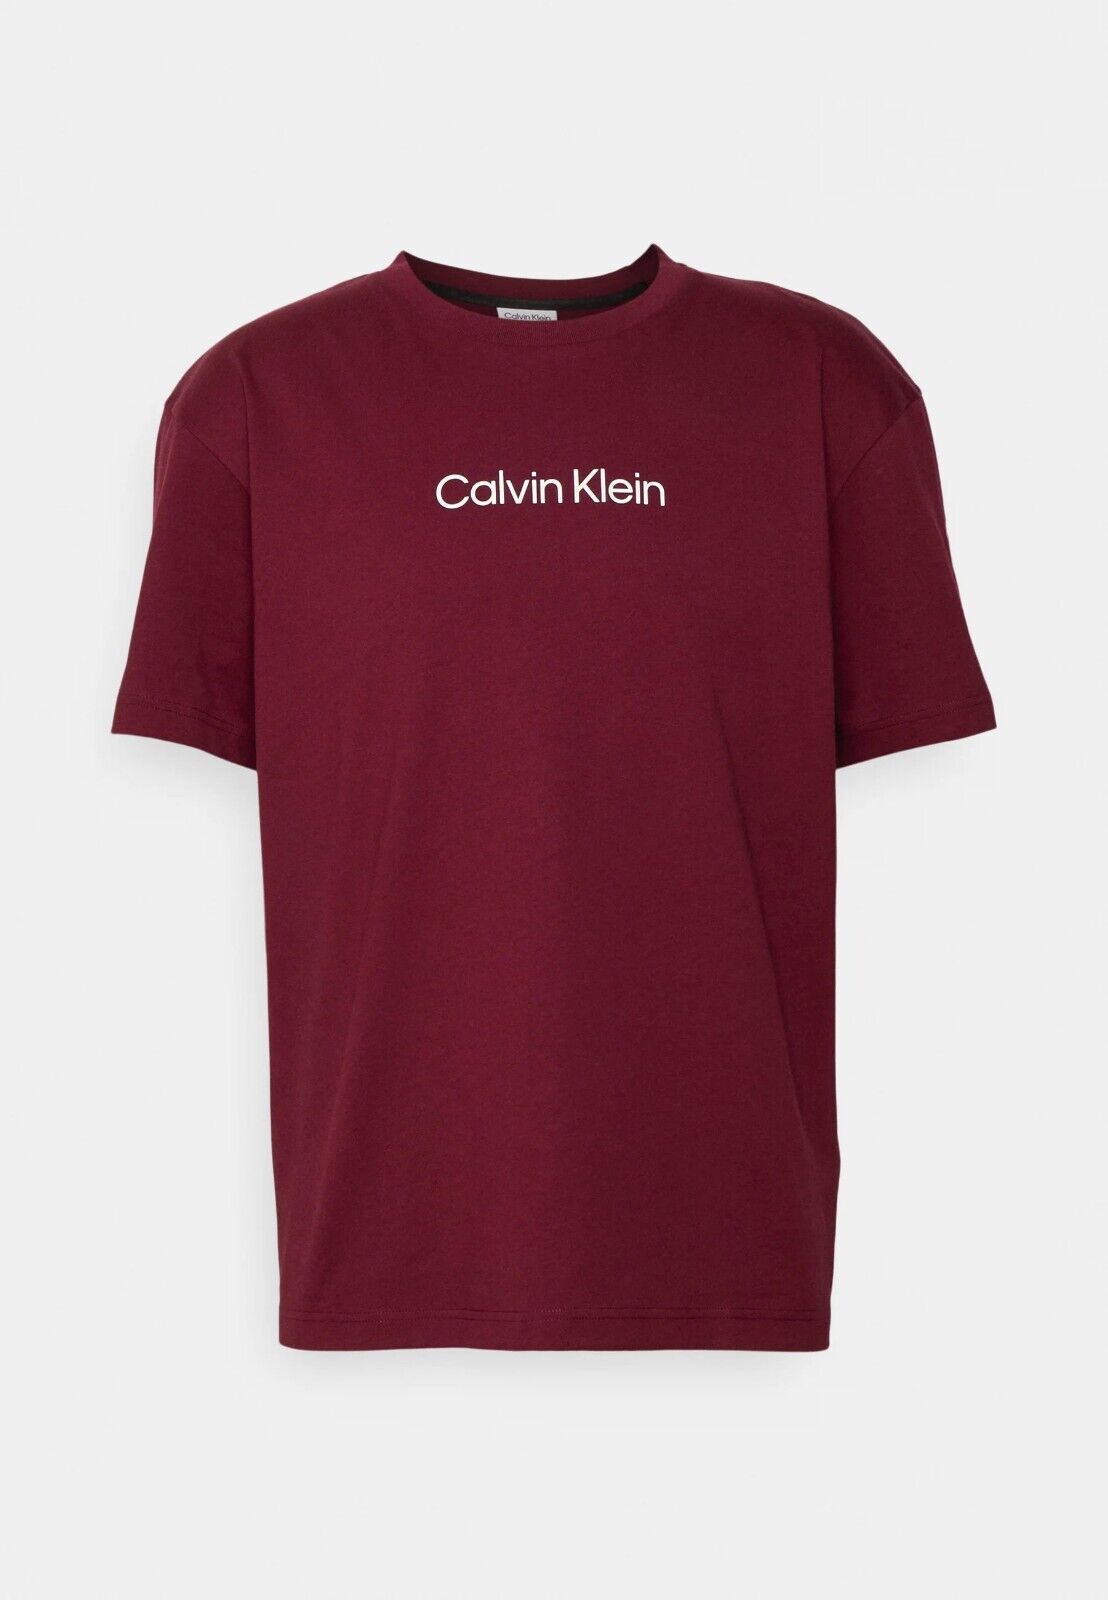 Calvin Klein T-Shirt - Slim Fit - Size M 